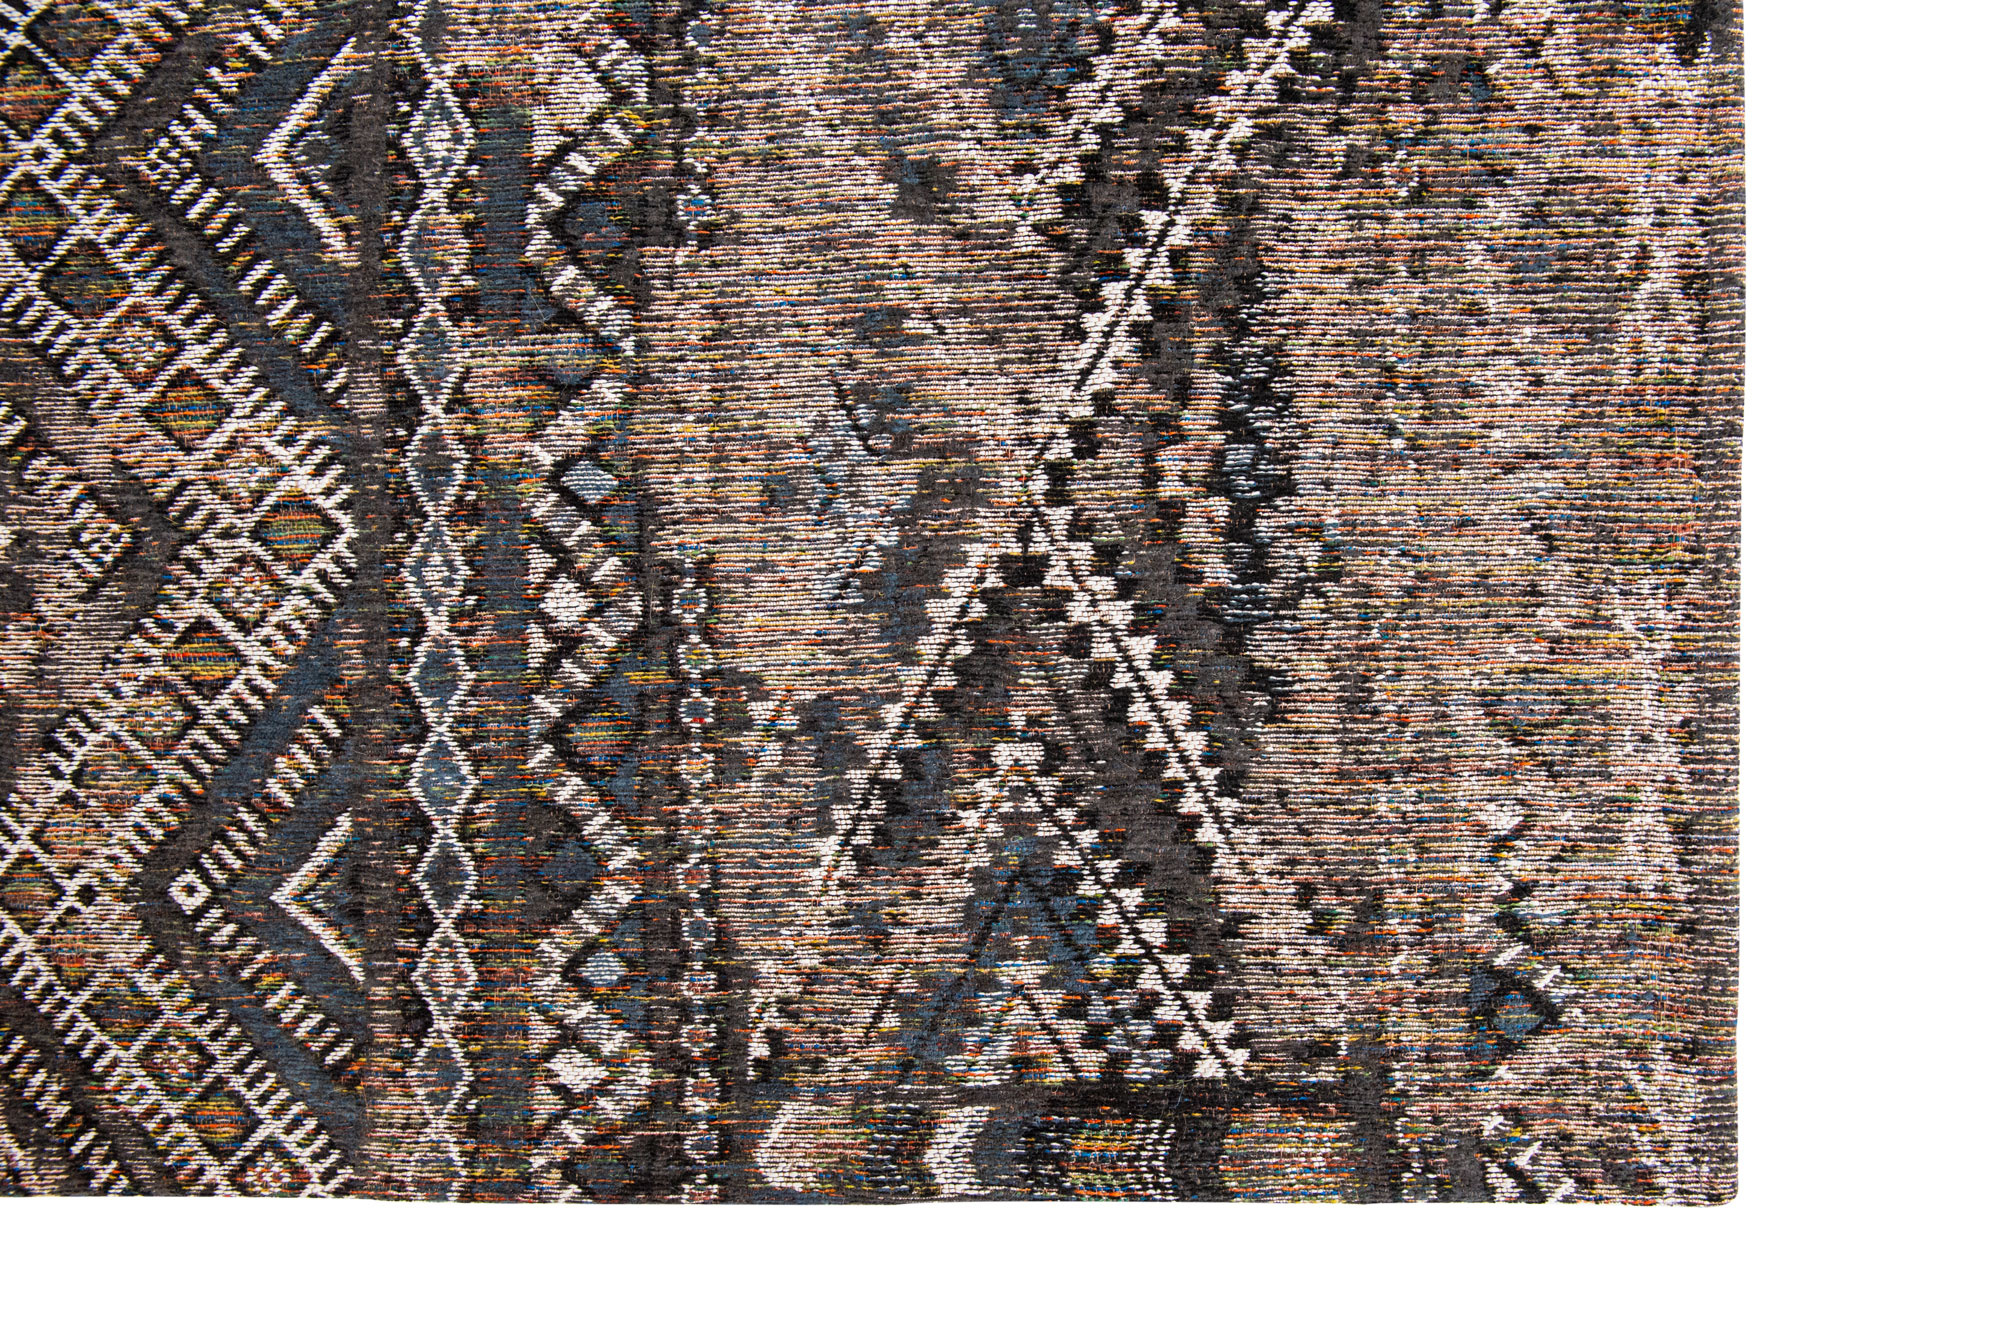 Antiquarian Flatwoven Black Rug ☞ Size: 5' 7" x 8' (170 x 240 cm)